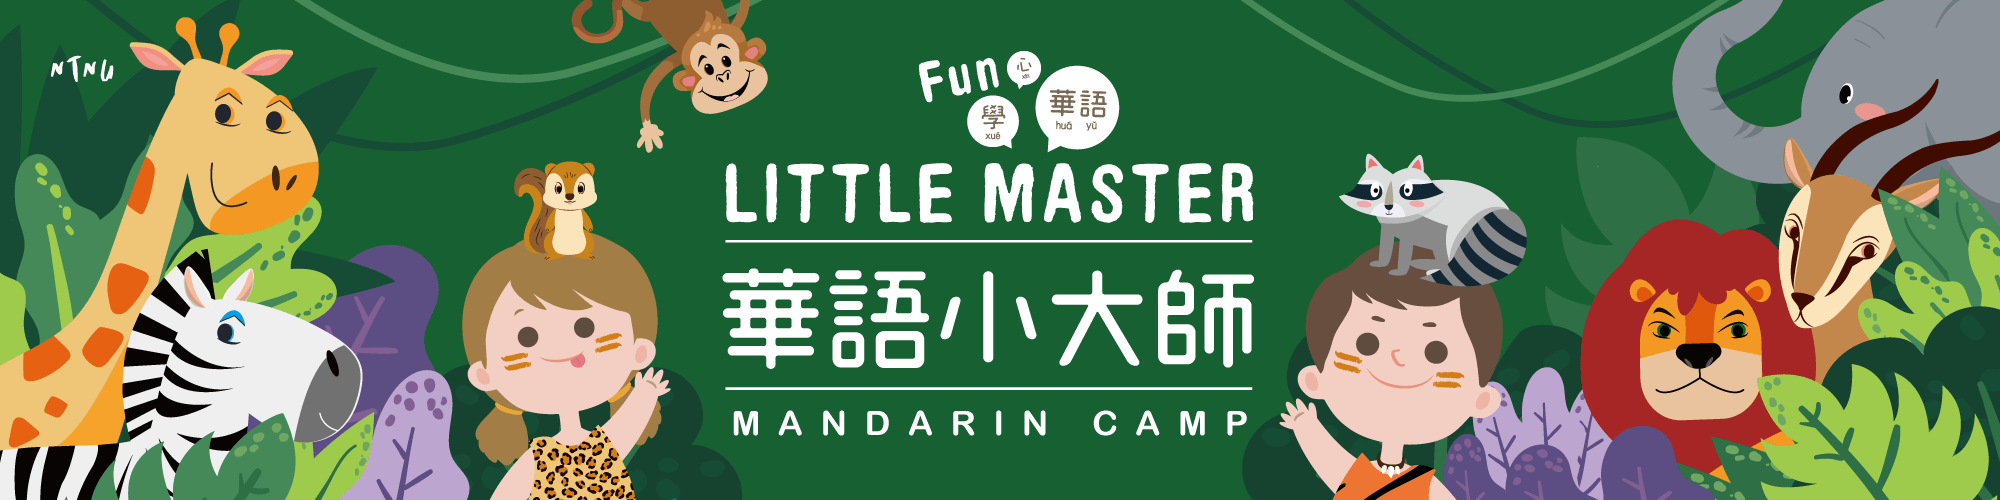 華語小大師夏令營-Little Master Mandarin Summer Camp